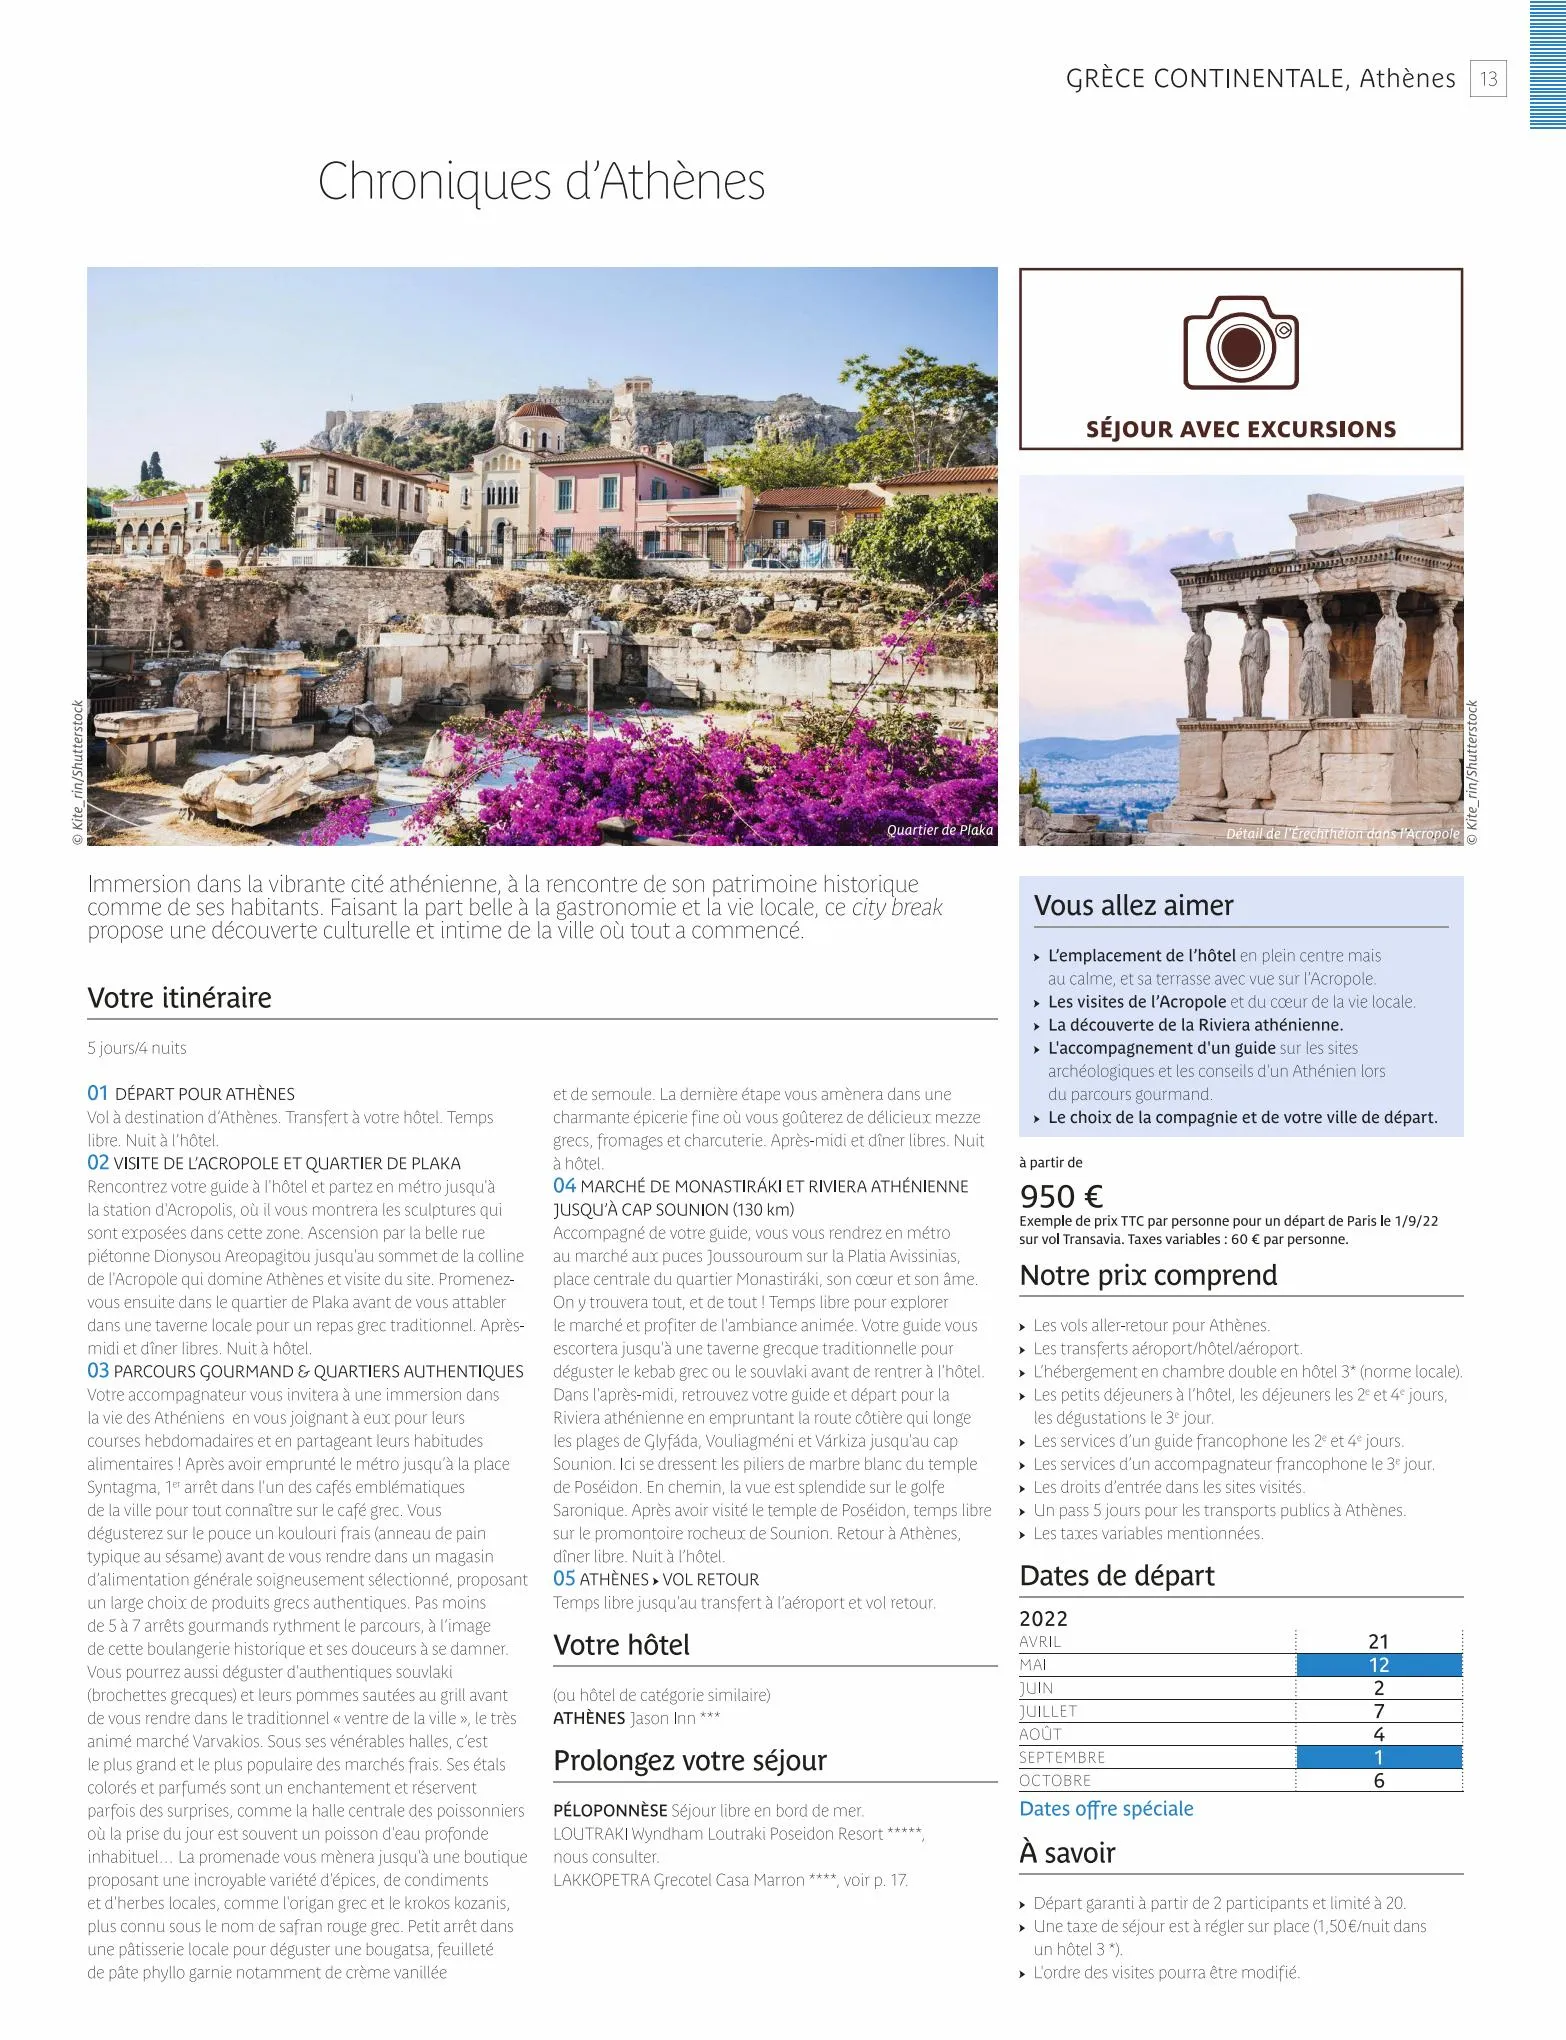 Catalogue Europe du Sud 2022, page 00015